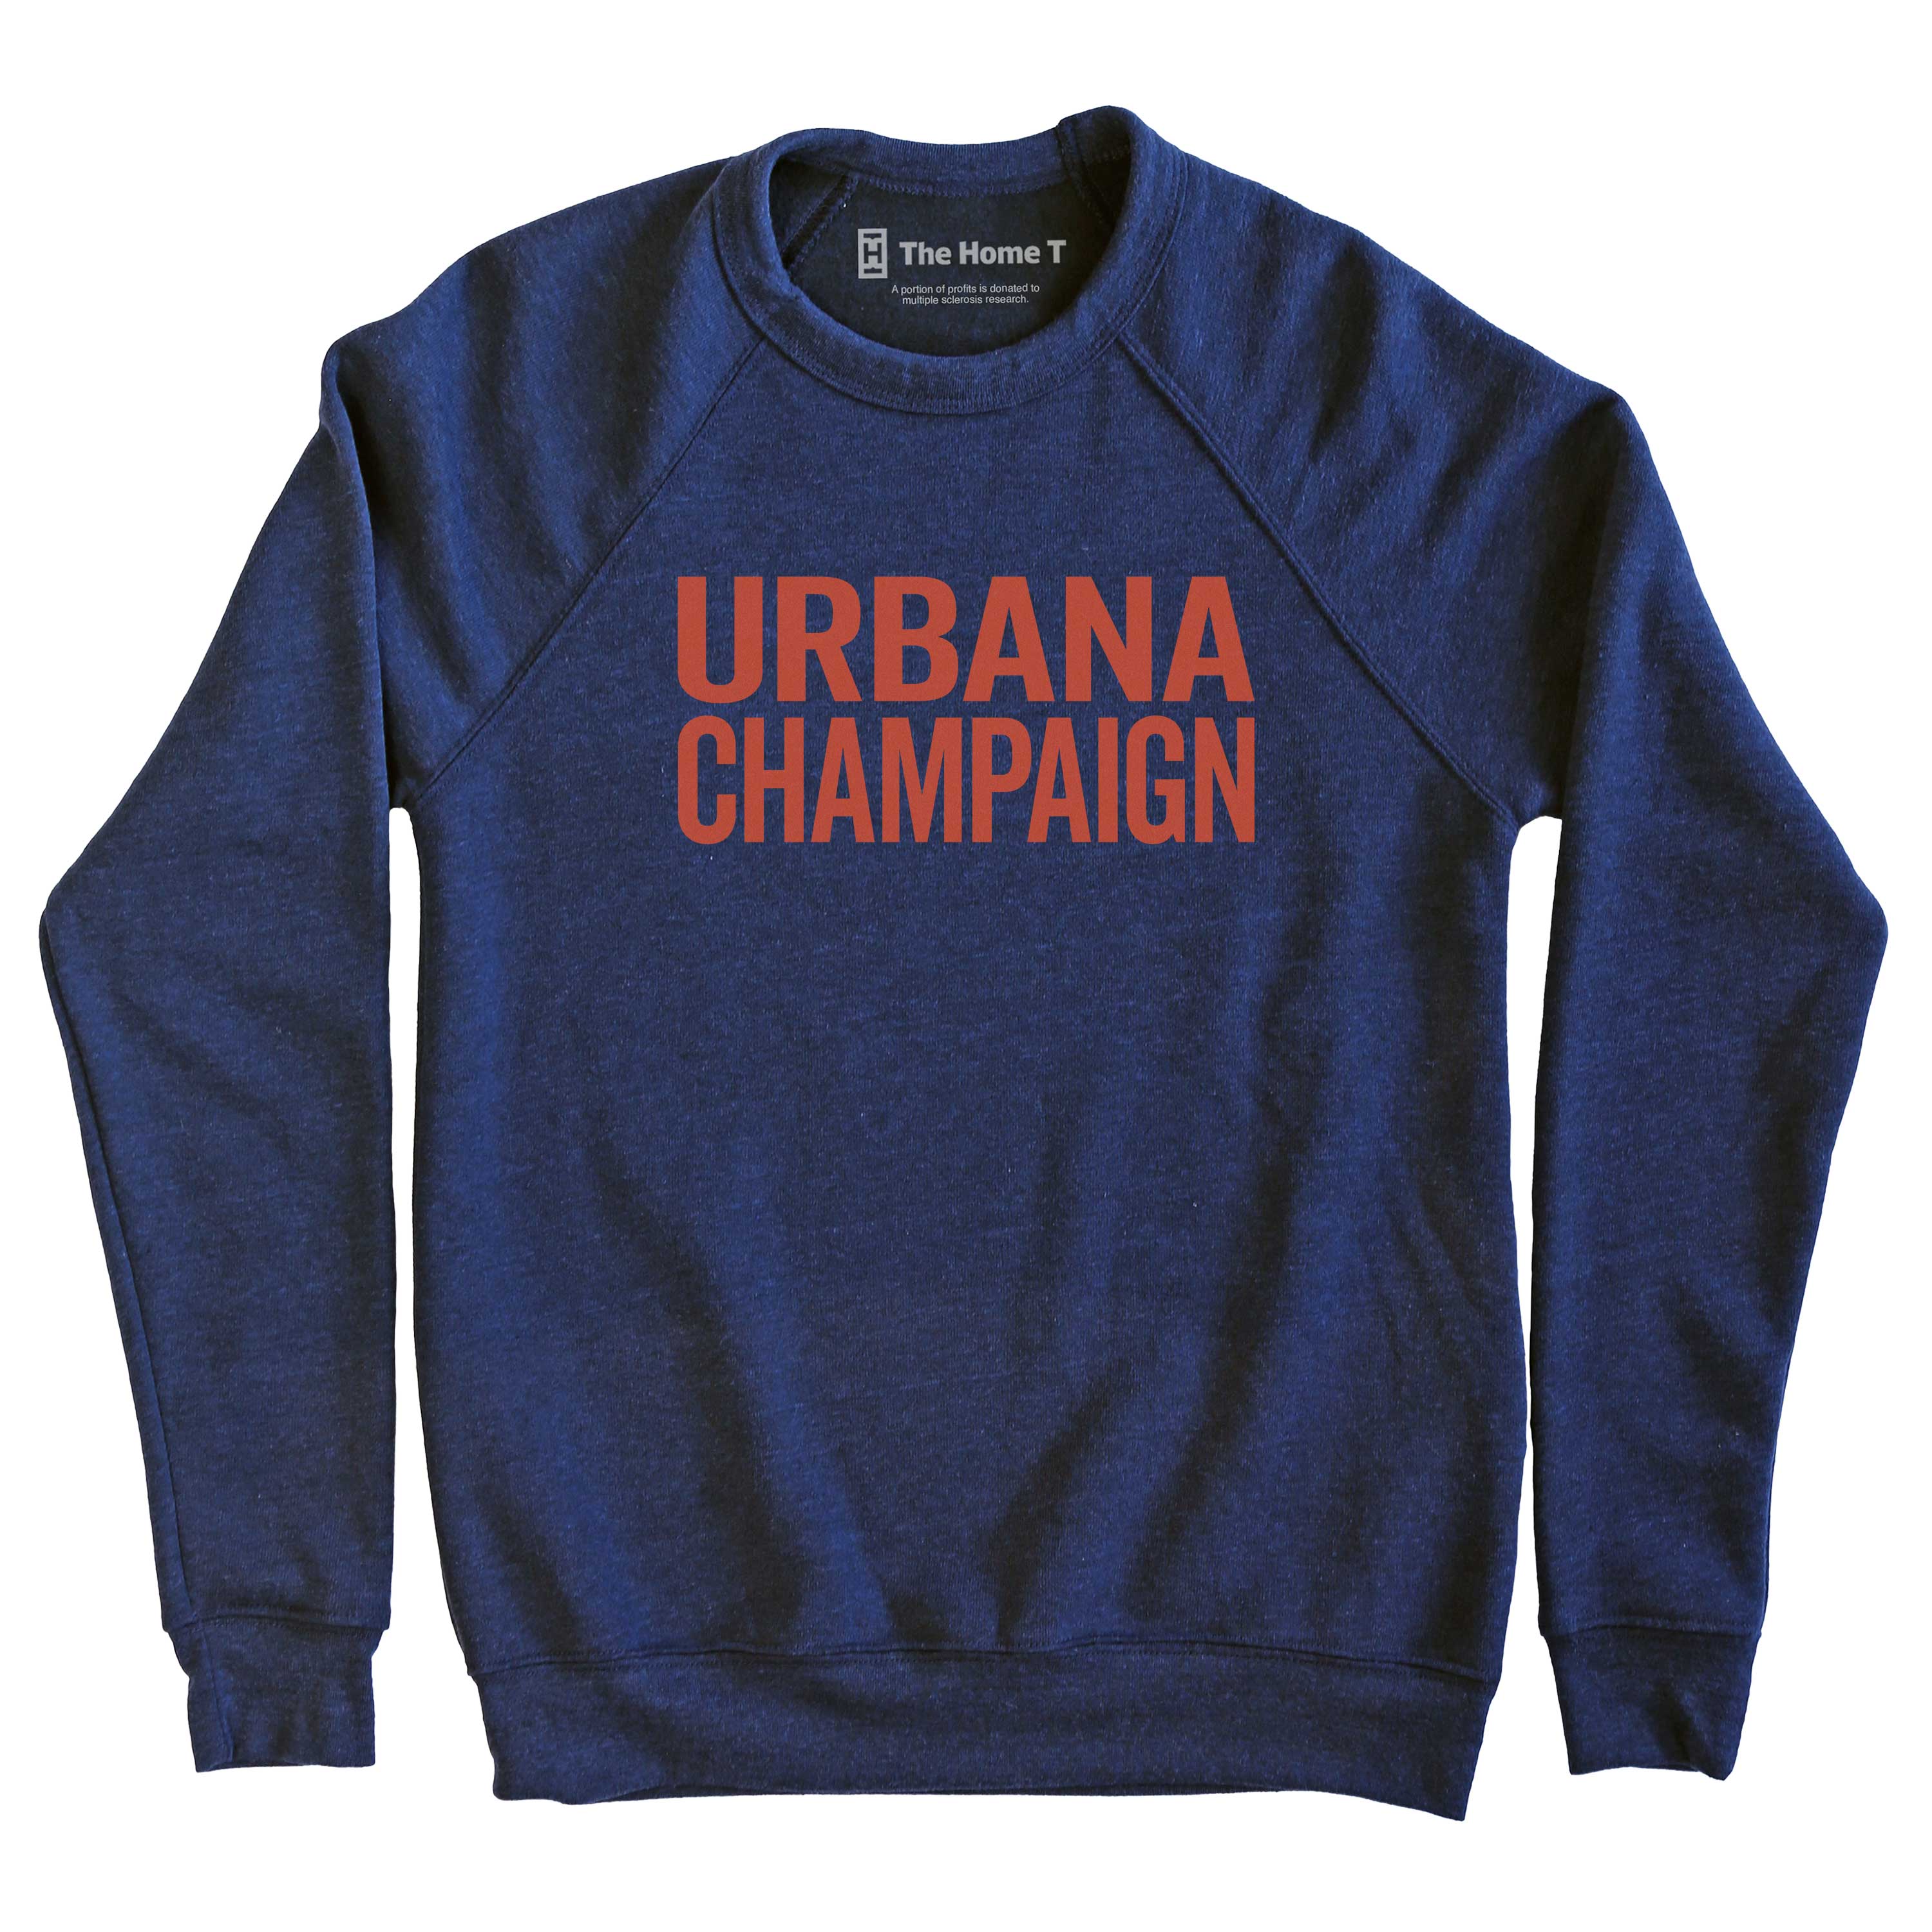 Urbana-Champaign Crew neck The Home T XS Sweatshirt